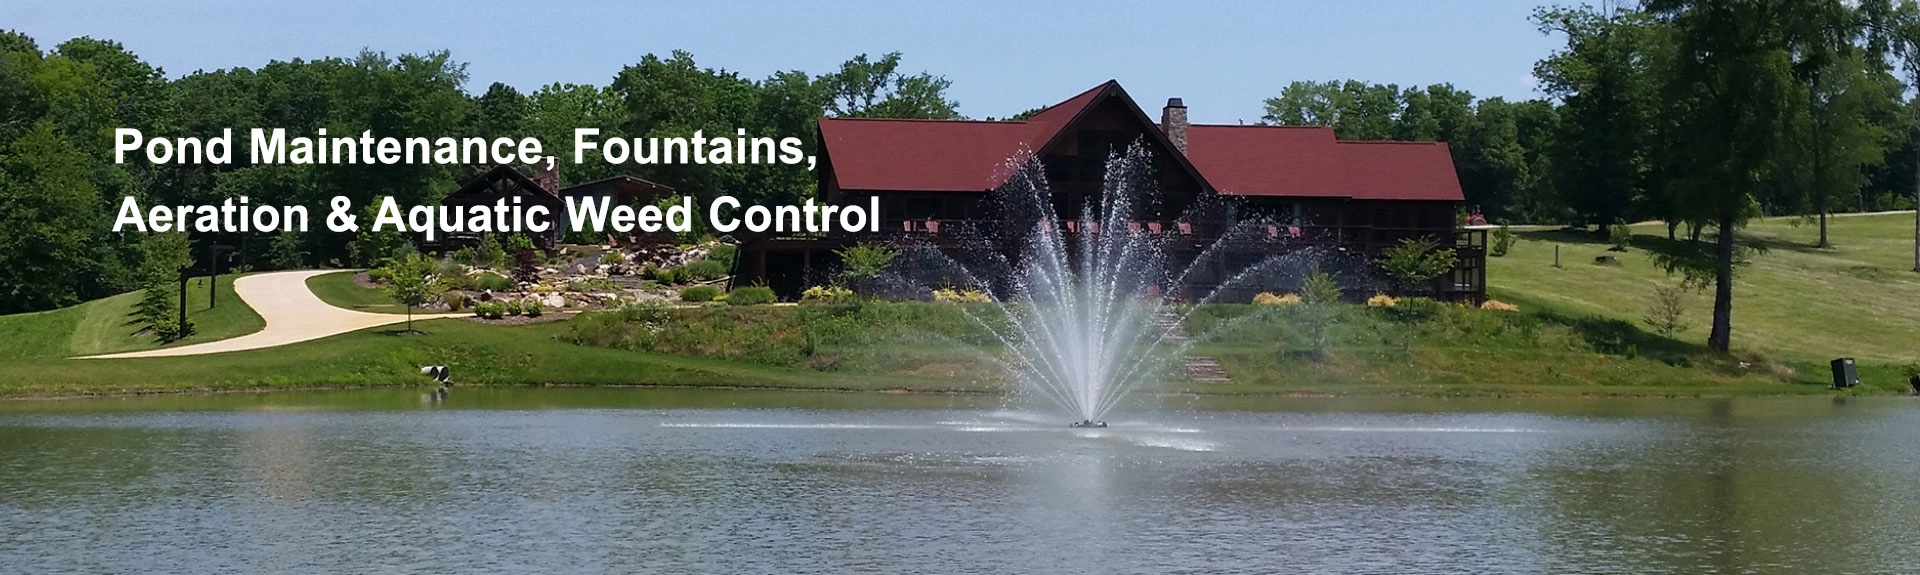 Pond Maintenance and Lake Management in North Carolina